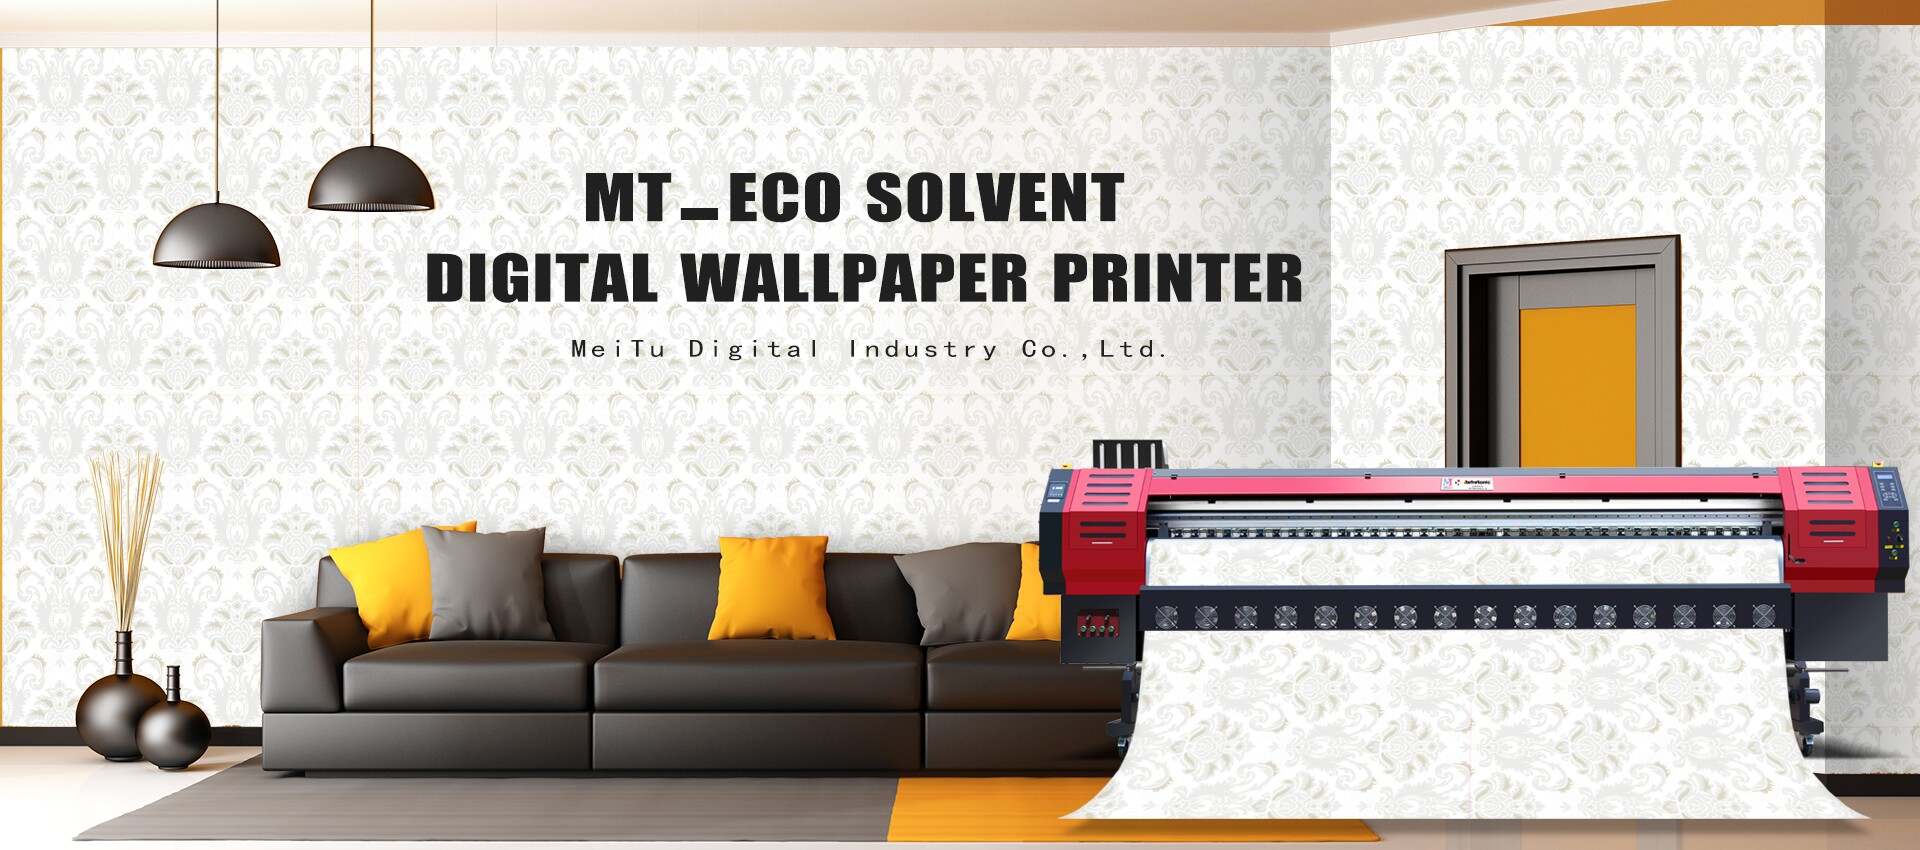 Wallpaper Printing Machine  Interior décor printer  Vulcan Prime  YouTube